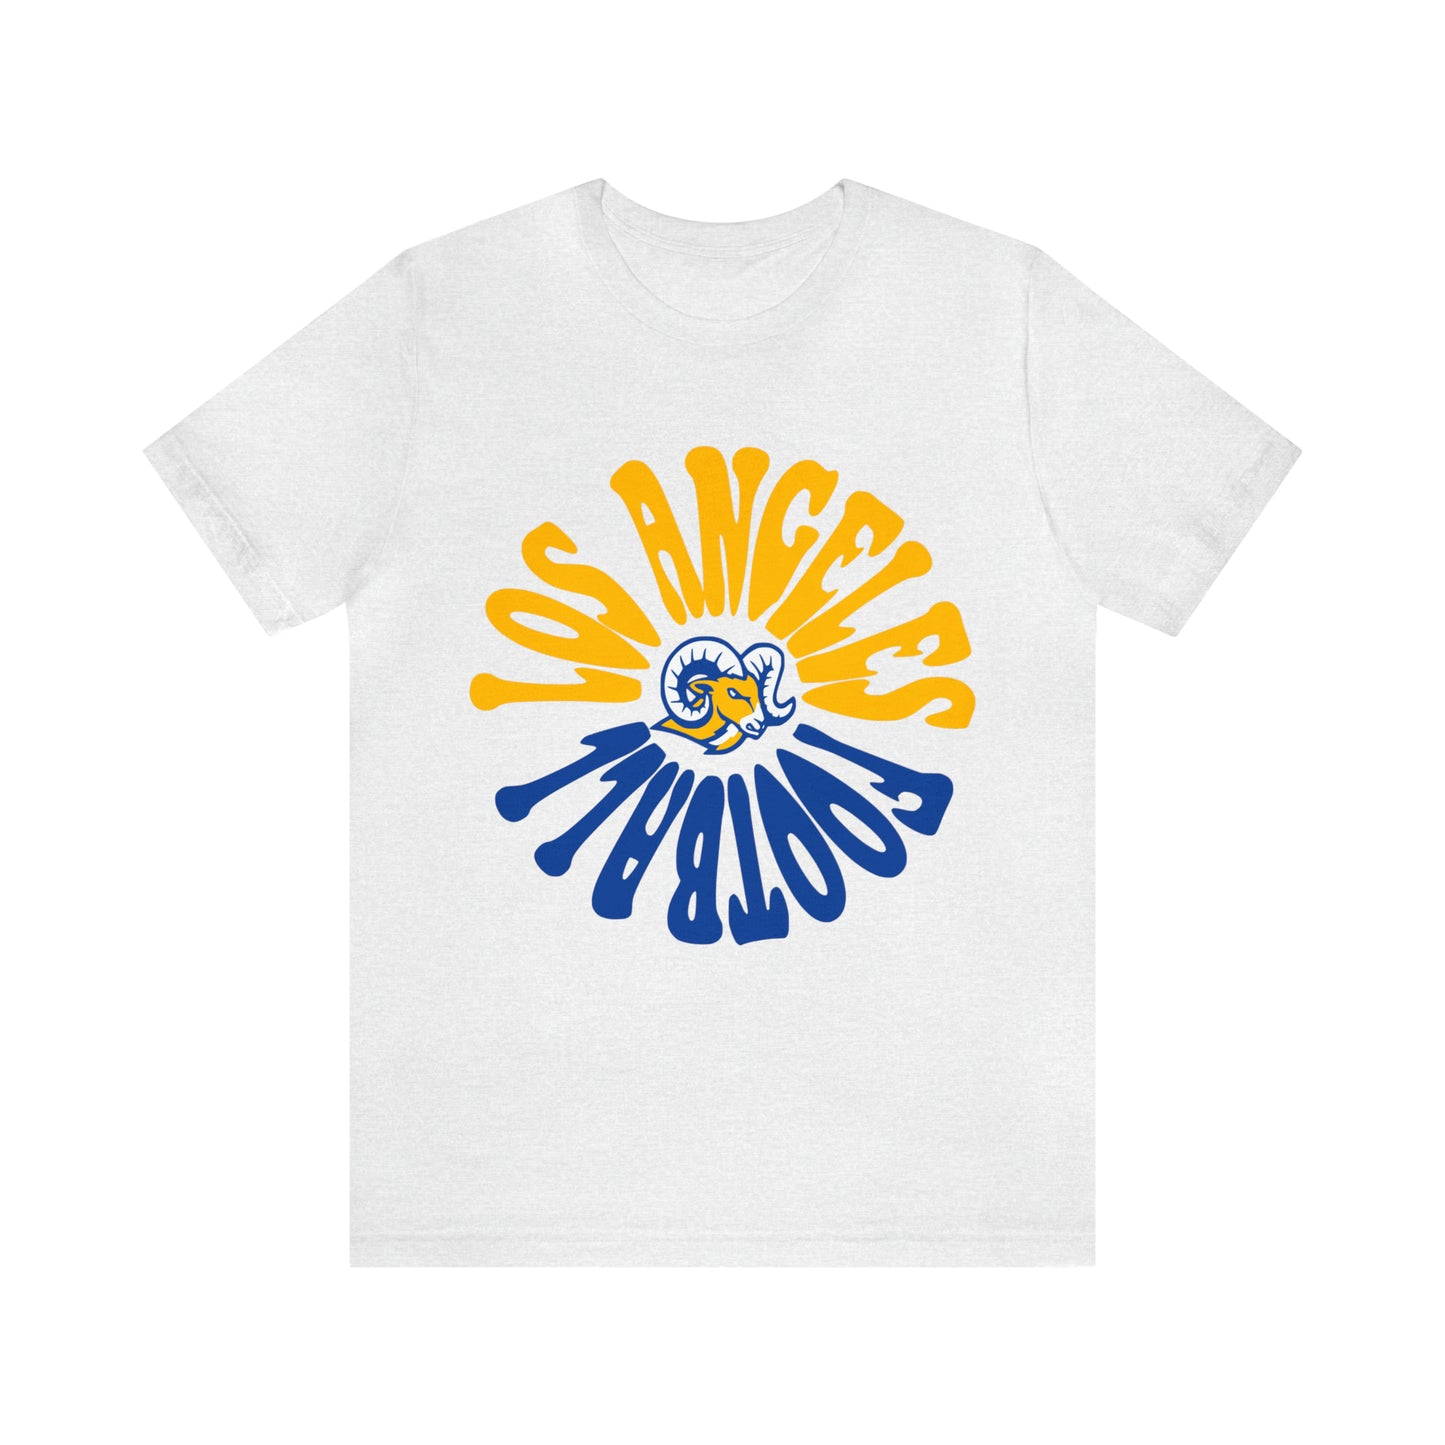 Vintage Los Angeles Rams Tee - Retro California Football T-Shirt Apparel - Men's & Women's Unisex Sizing - Design 2